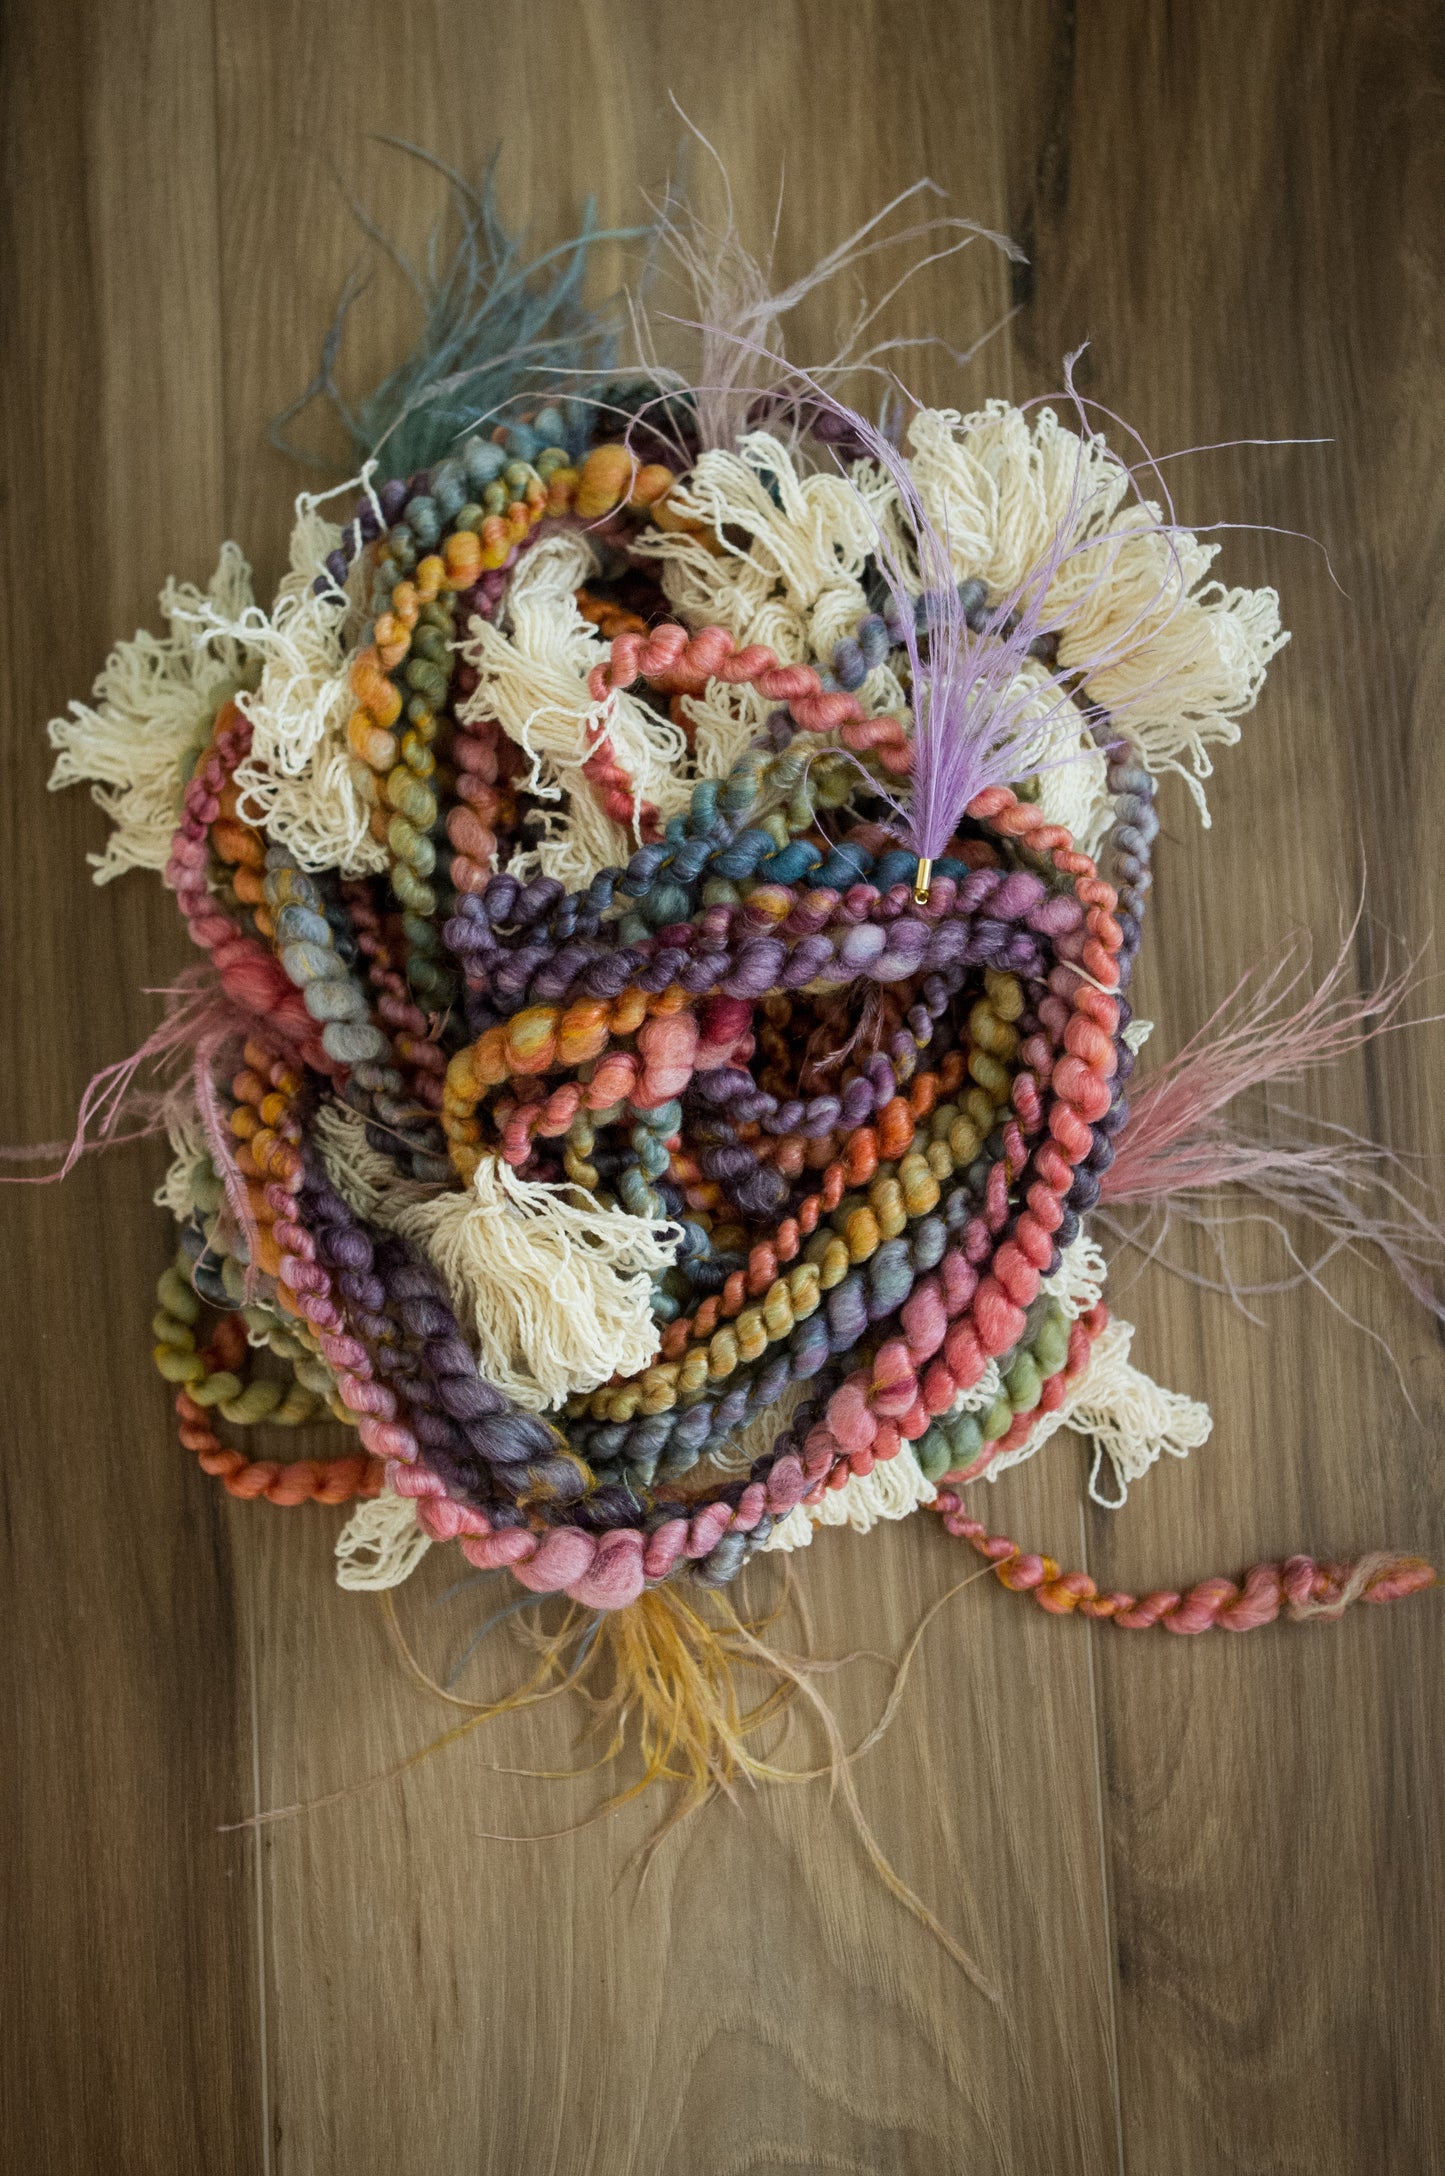 Feather Tassels and Fringe Handspun Art Yarn